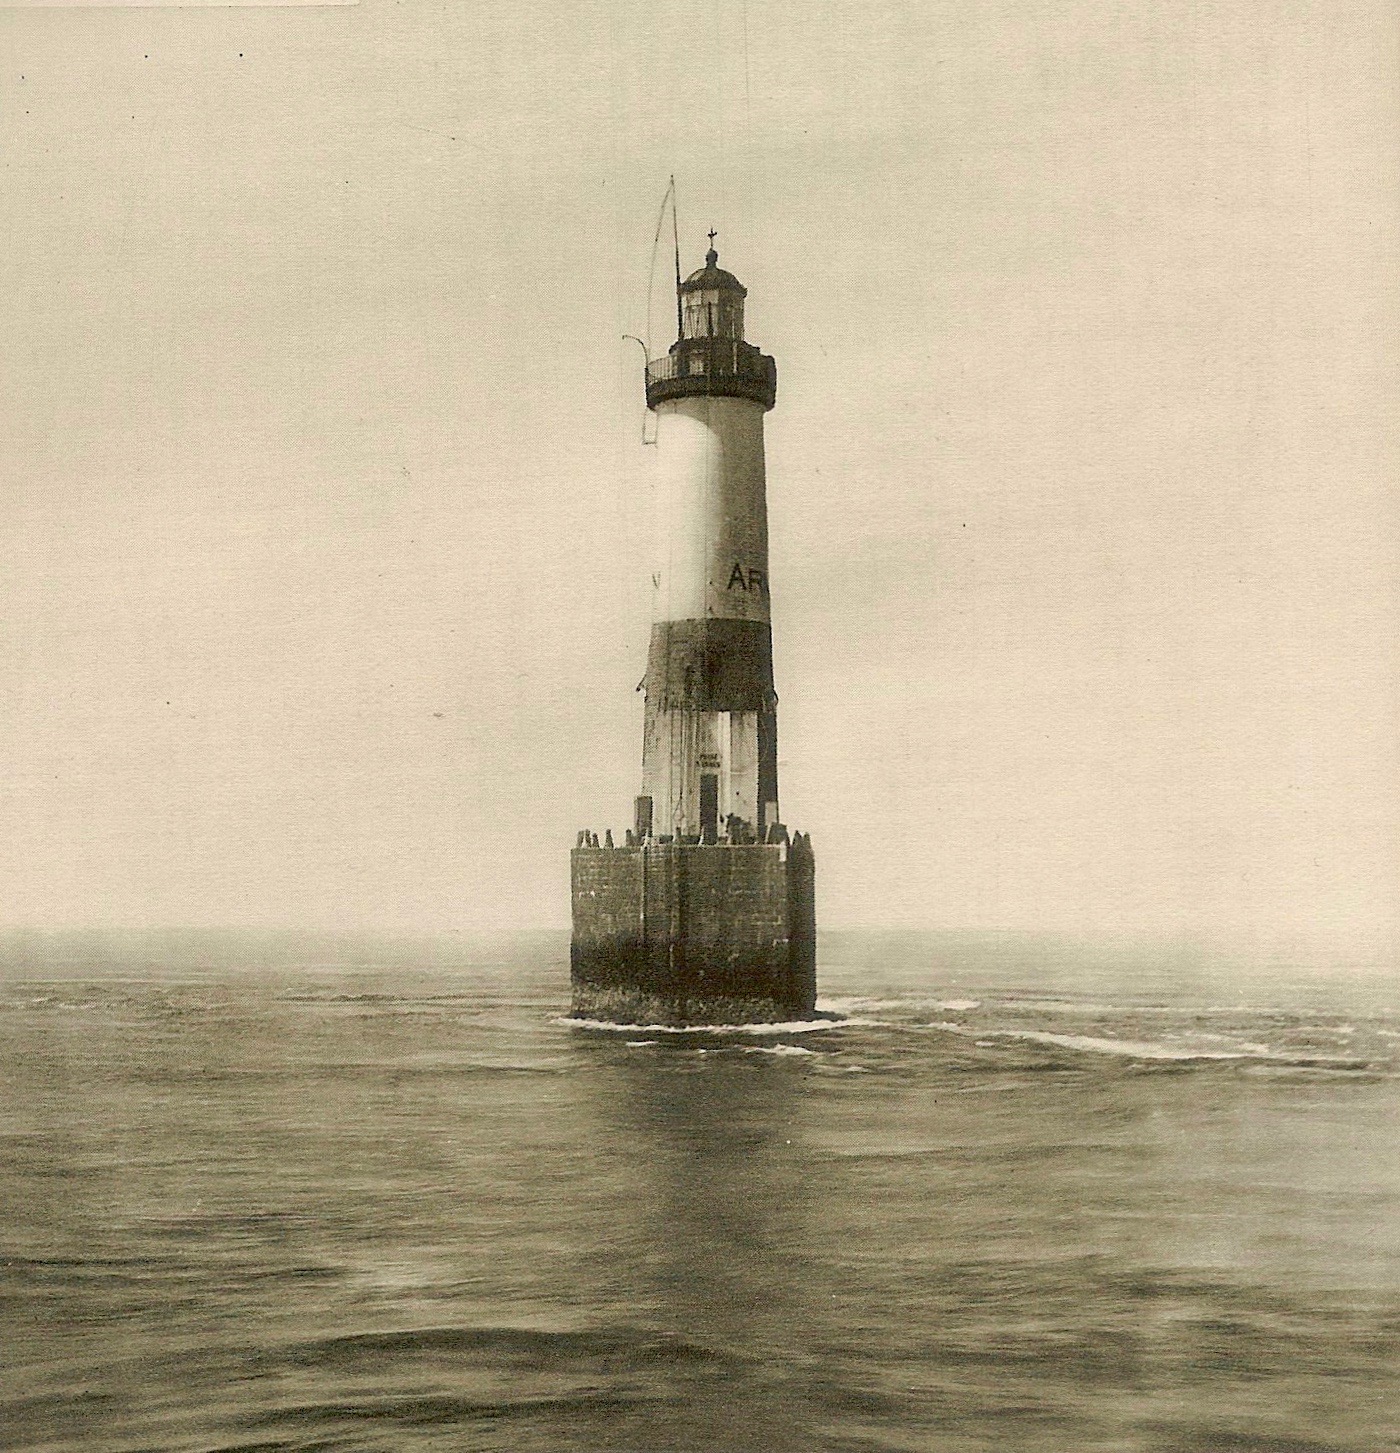 Lampe phare marin : reproduction du phare Ar Men de l'Ile de Sein